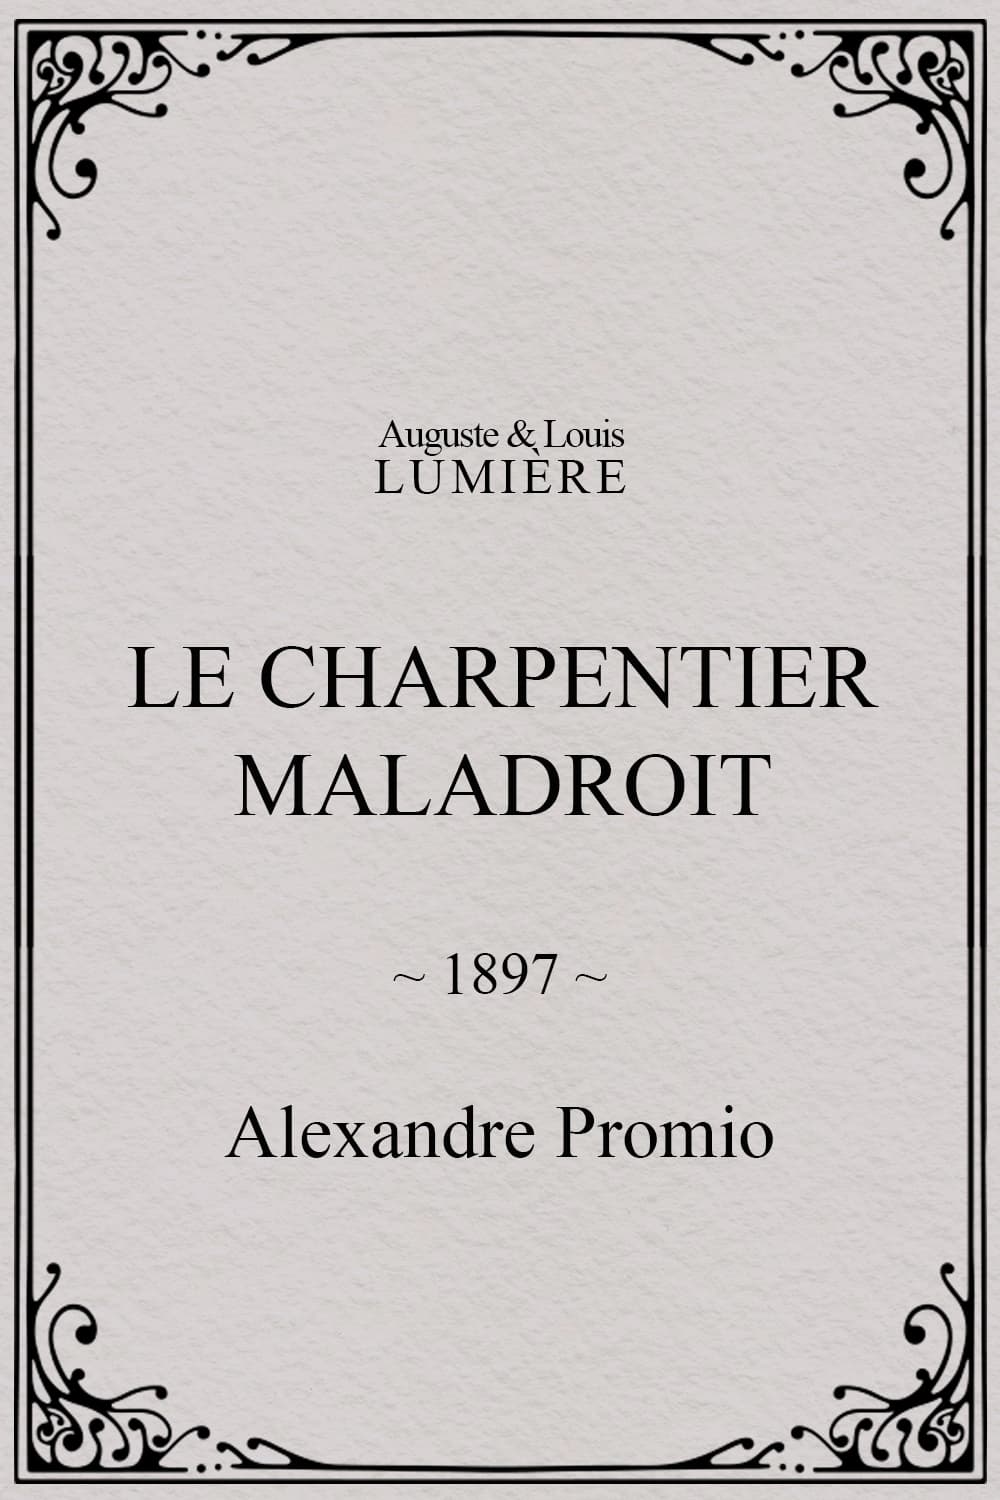 Le charpentier maladroit (1897)